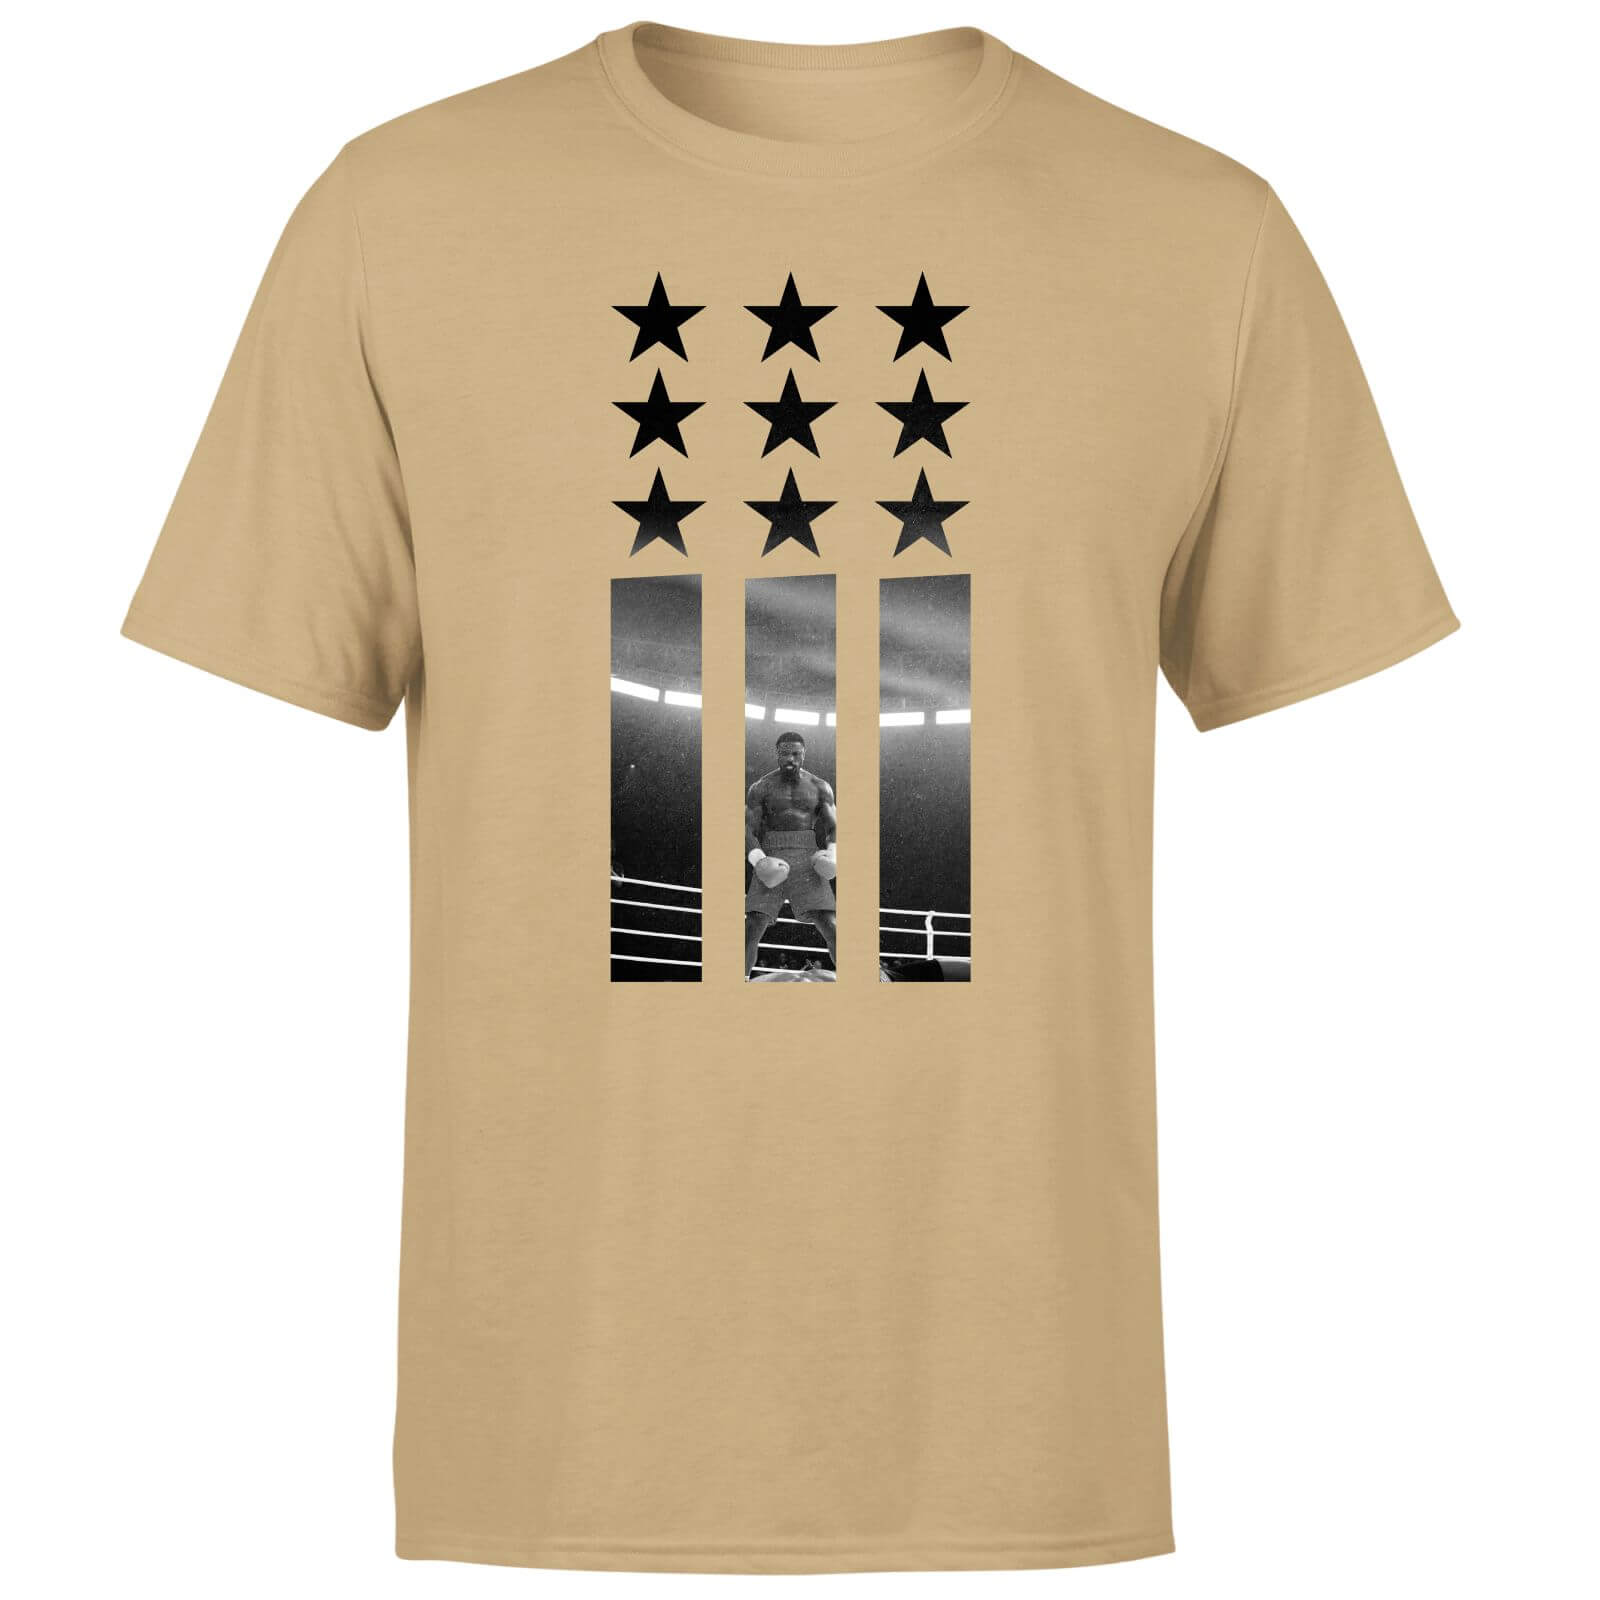 Creed Poster Stars Men's T-Shirt - Tan - XS